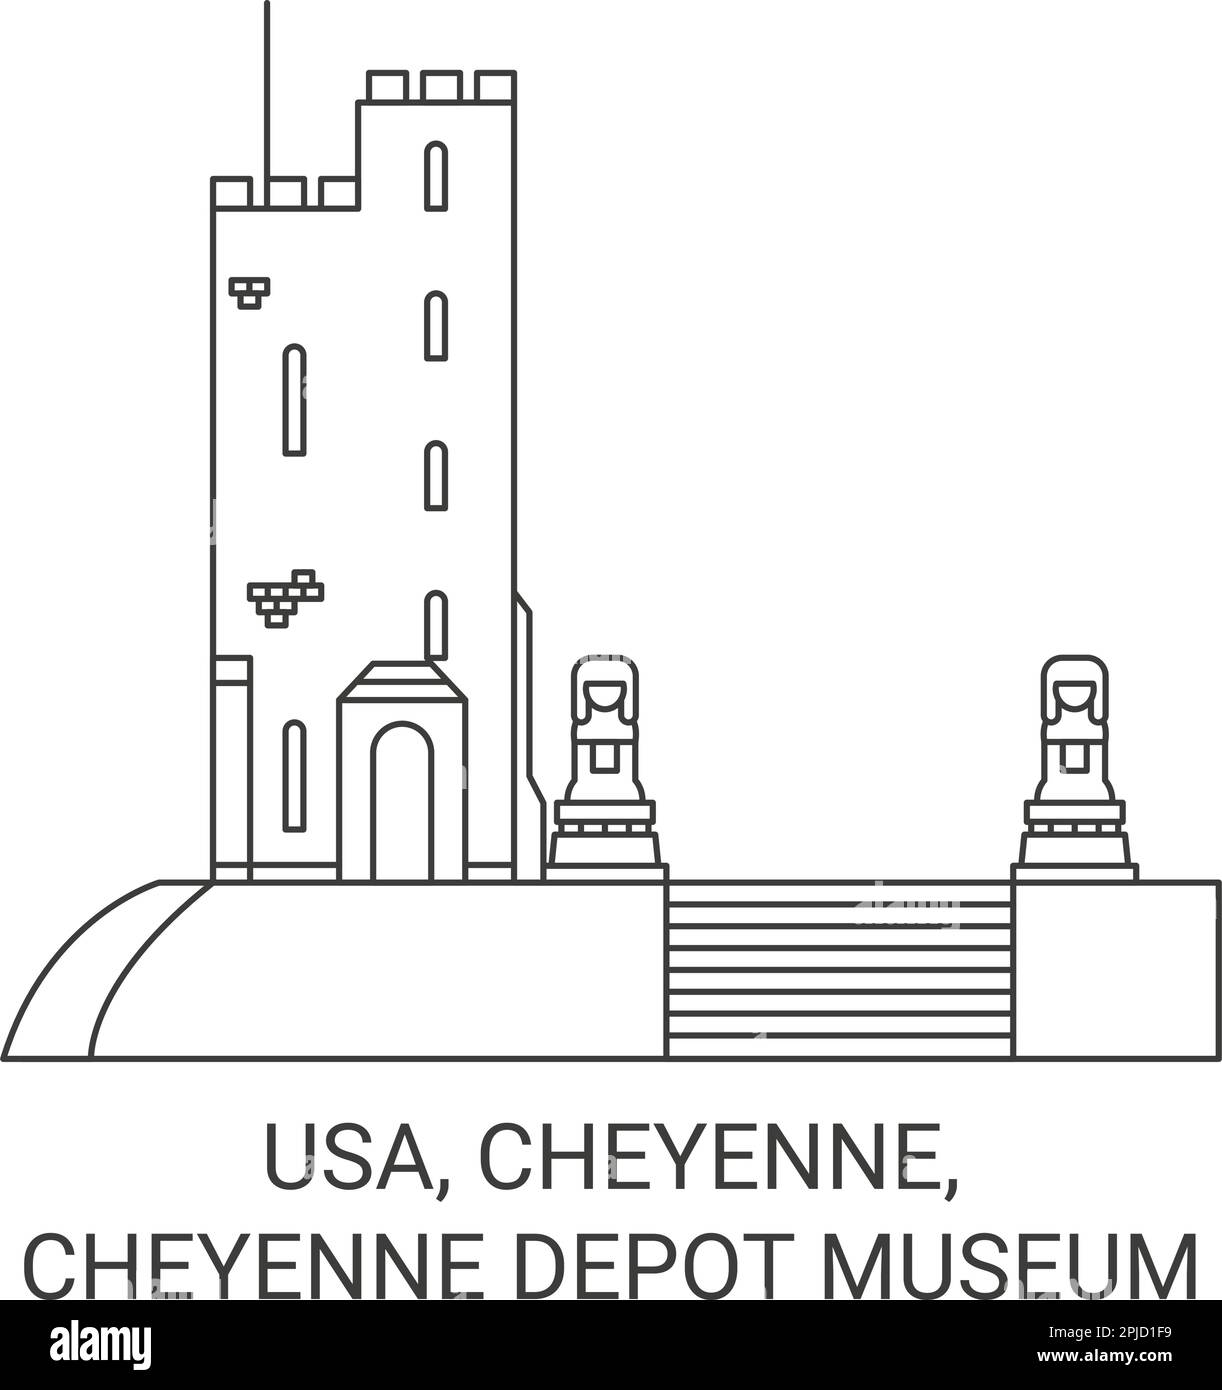 Usa, Cheyenne, Cheyenne Depot Museum travel landmark vector illustration Stock Vector